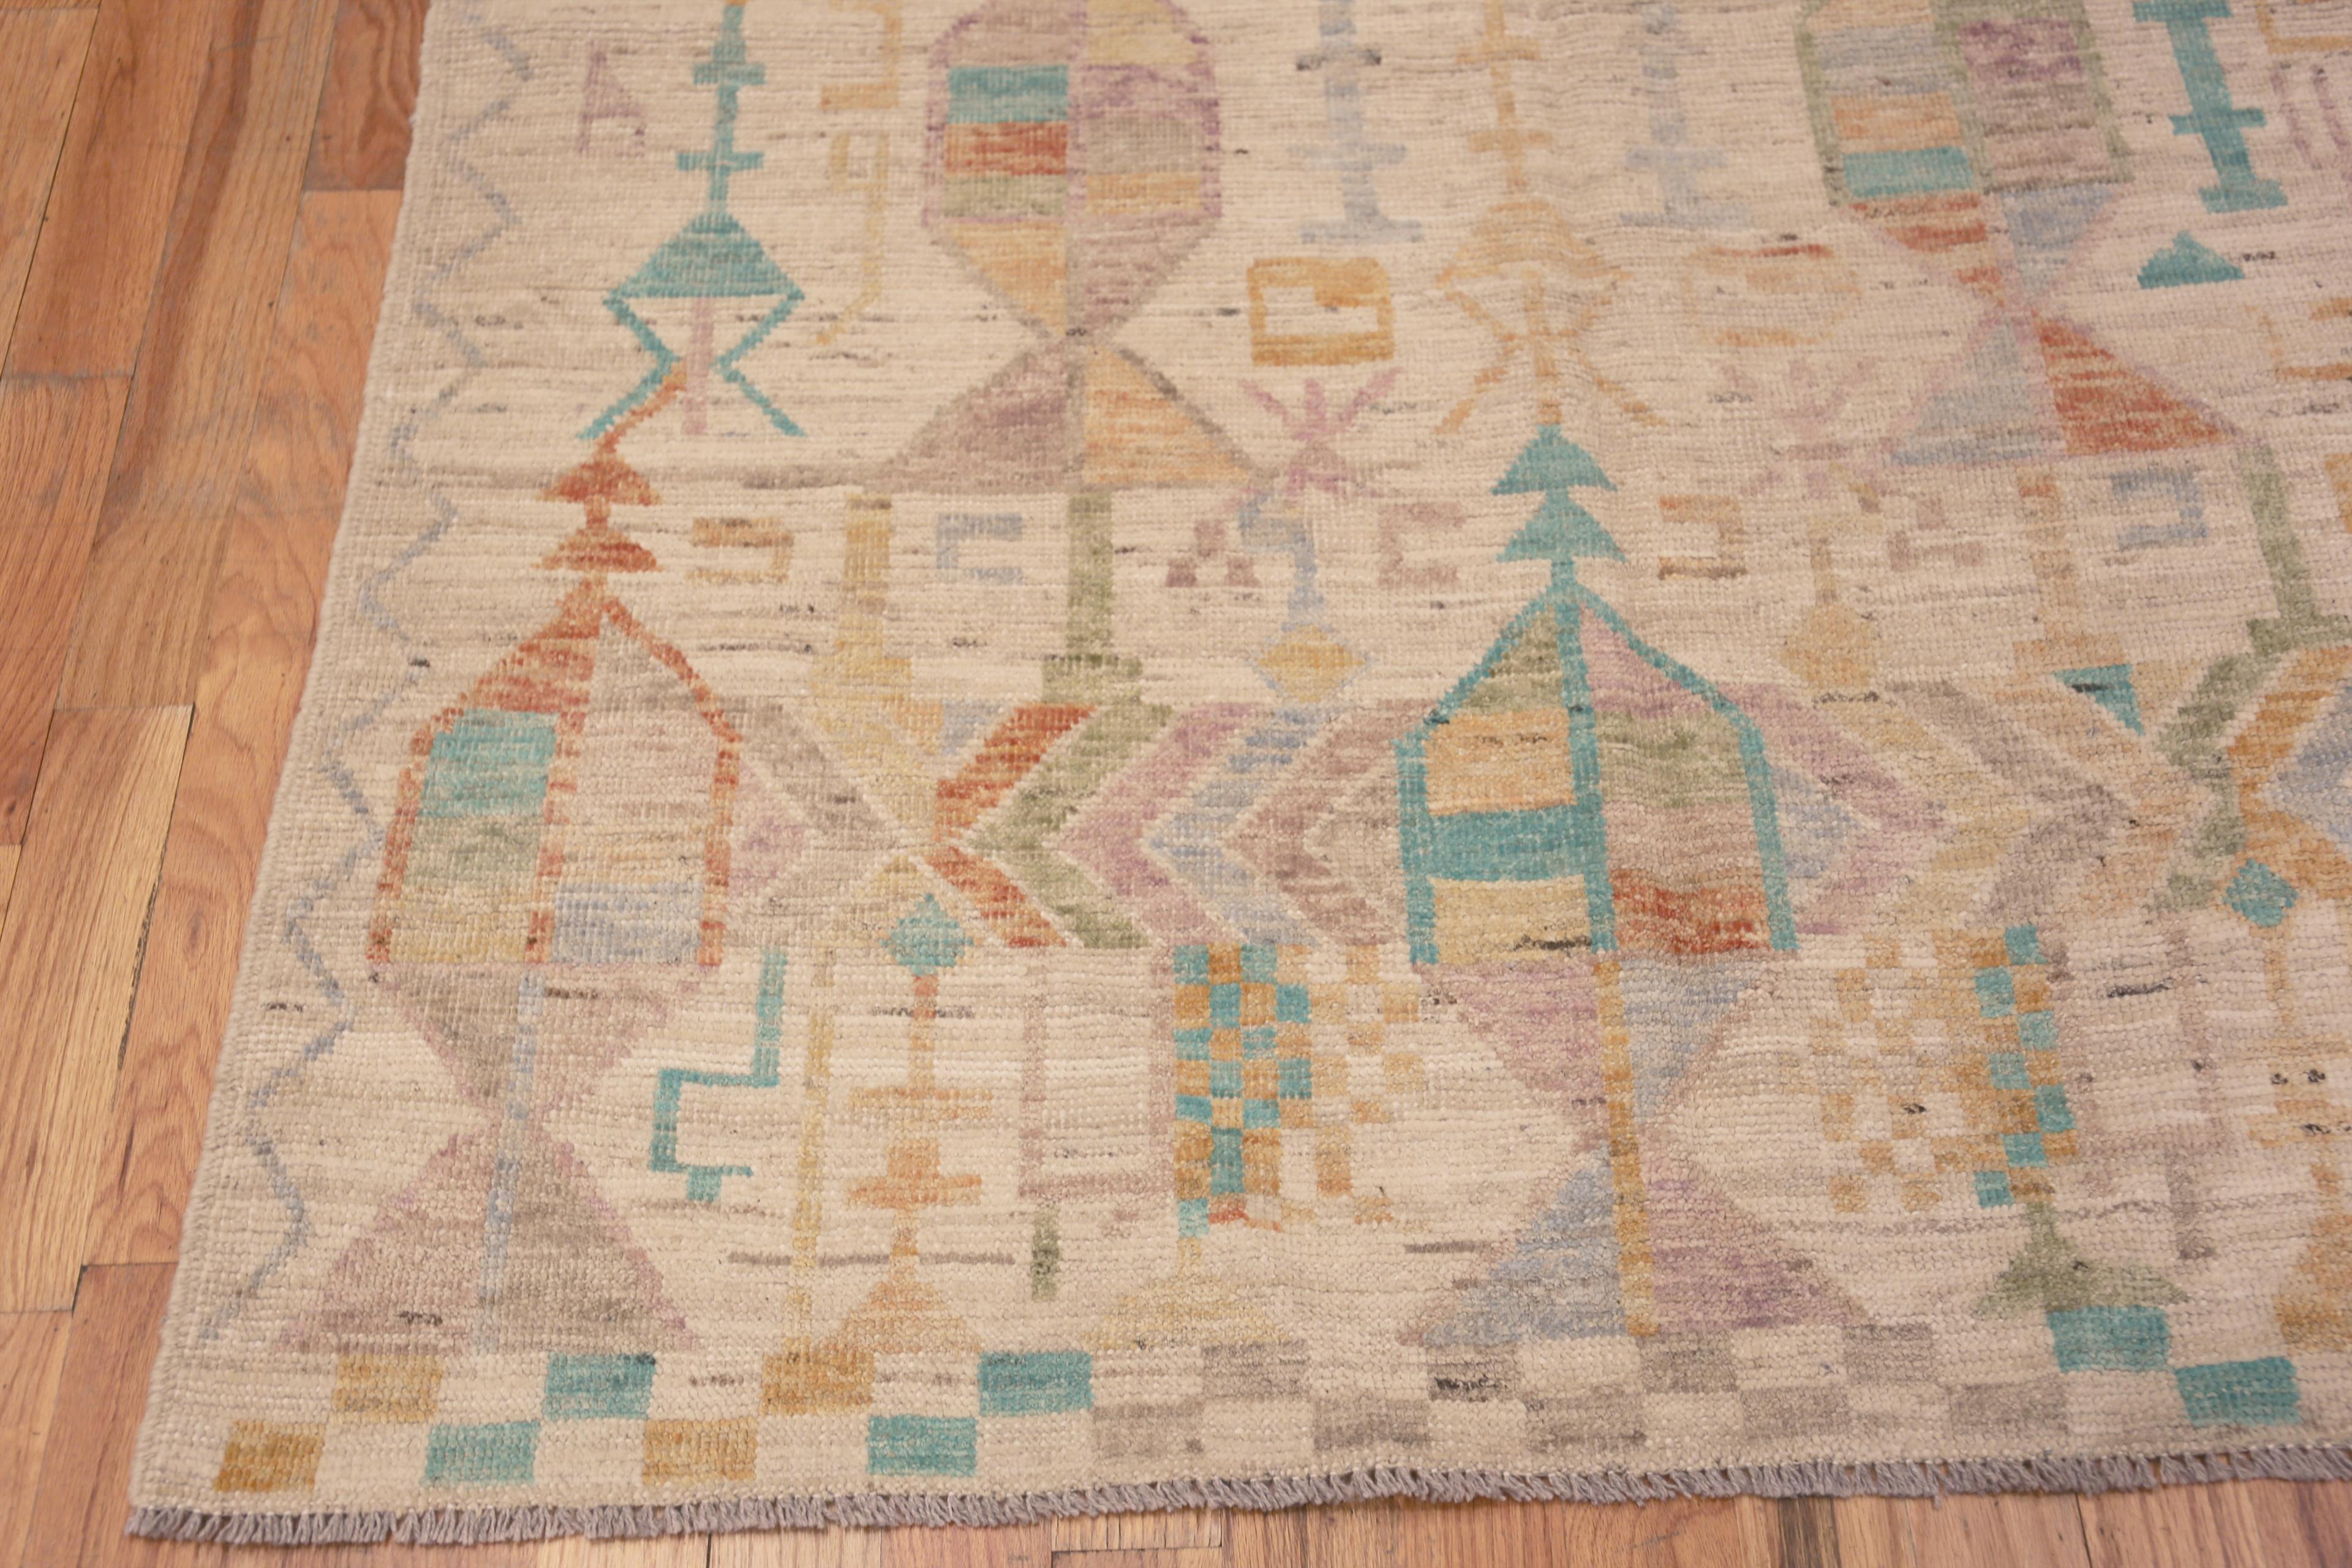 Lovely Tribal Geometric Modern Contemporary Handmade Wool Area Rug, Herkunftsland: Zentralasien, Entstehungszeit: Modern Rugs